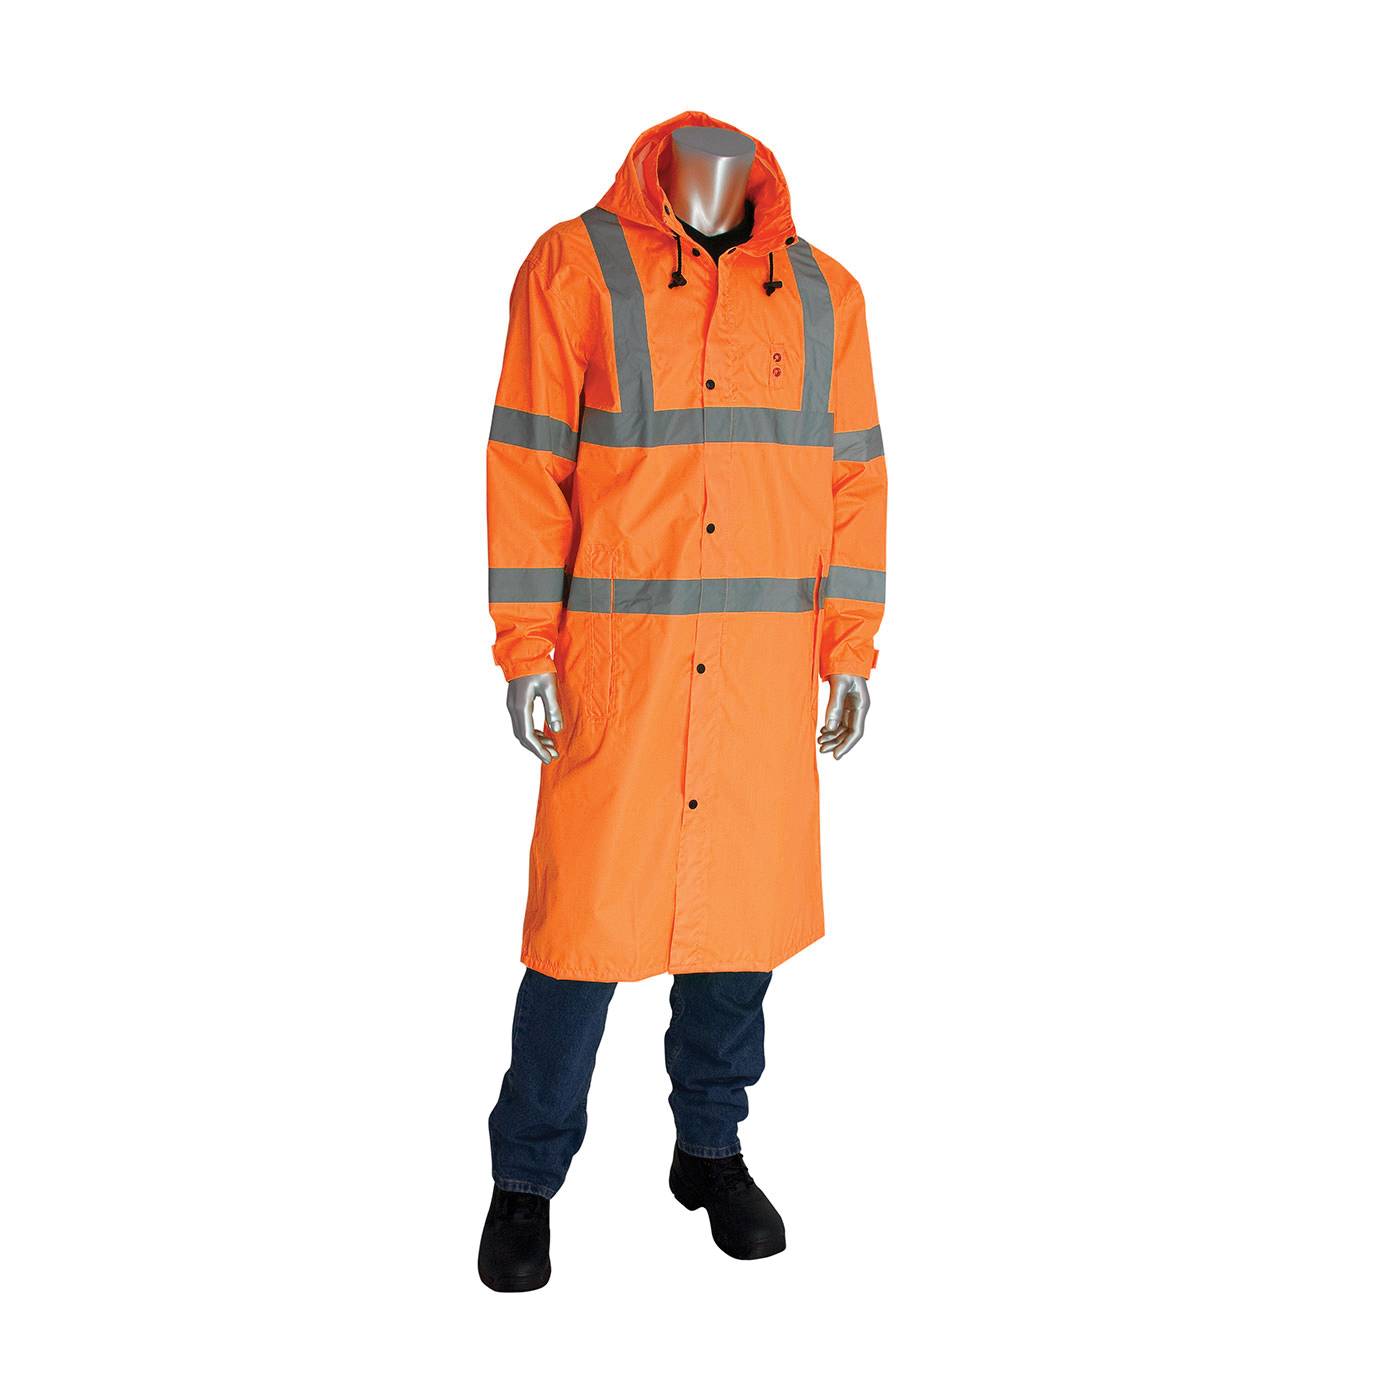 PIP® FALCON™ Viz™ 353-1048-OR/XL All Purpose Waterproof Rain Coat, XL, Hi-Viz Orange, 150D Polyester Coated with Polyurethane, Resists: Water, ANSI 107 Type R Class 3, Concealed Hood